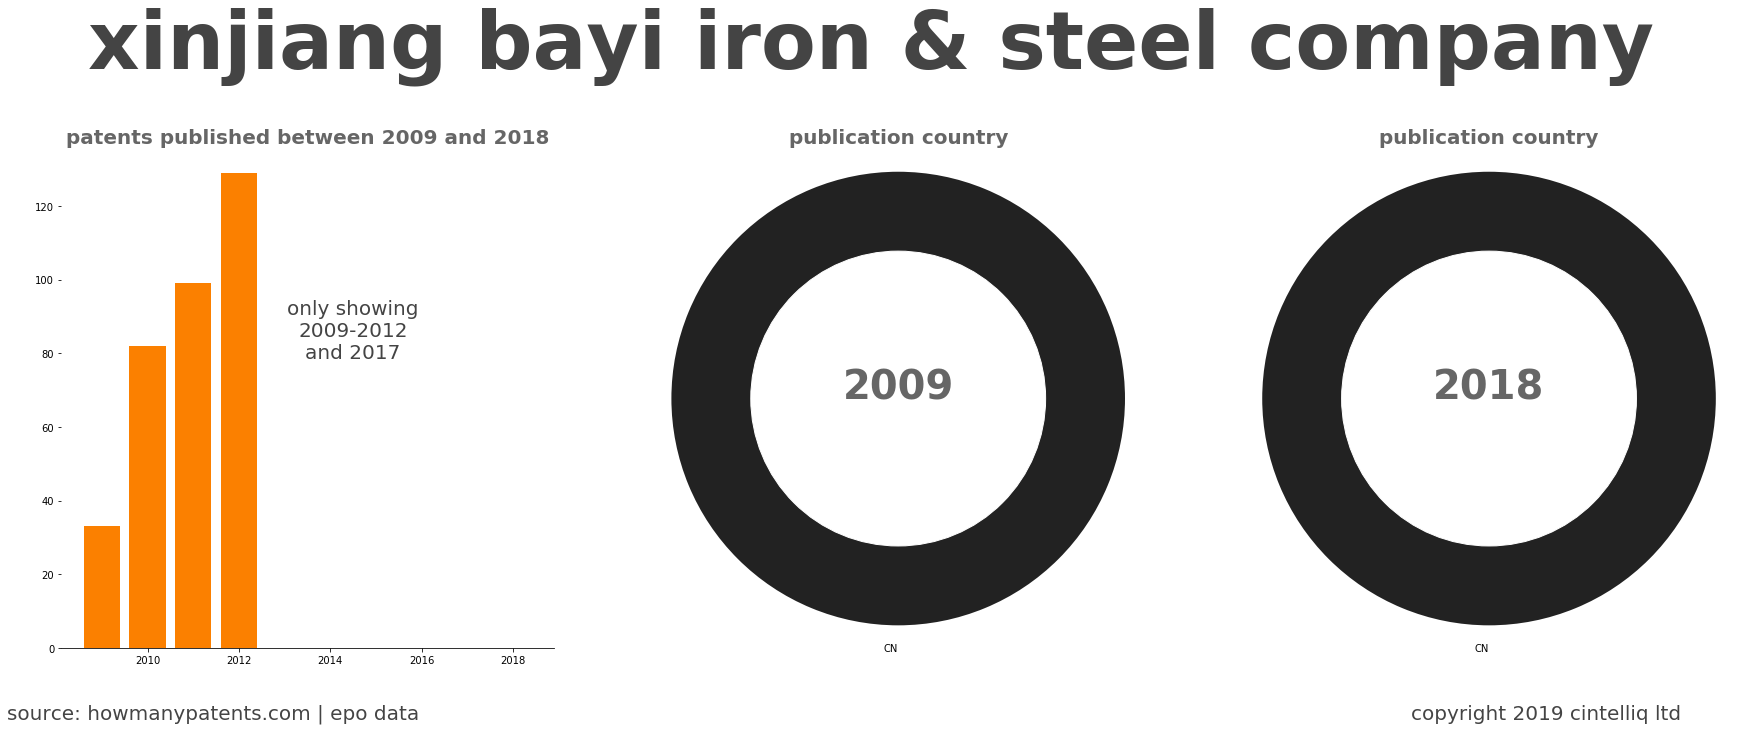 summary of patents for Xinjiang Bayi Iron & Steel Company